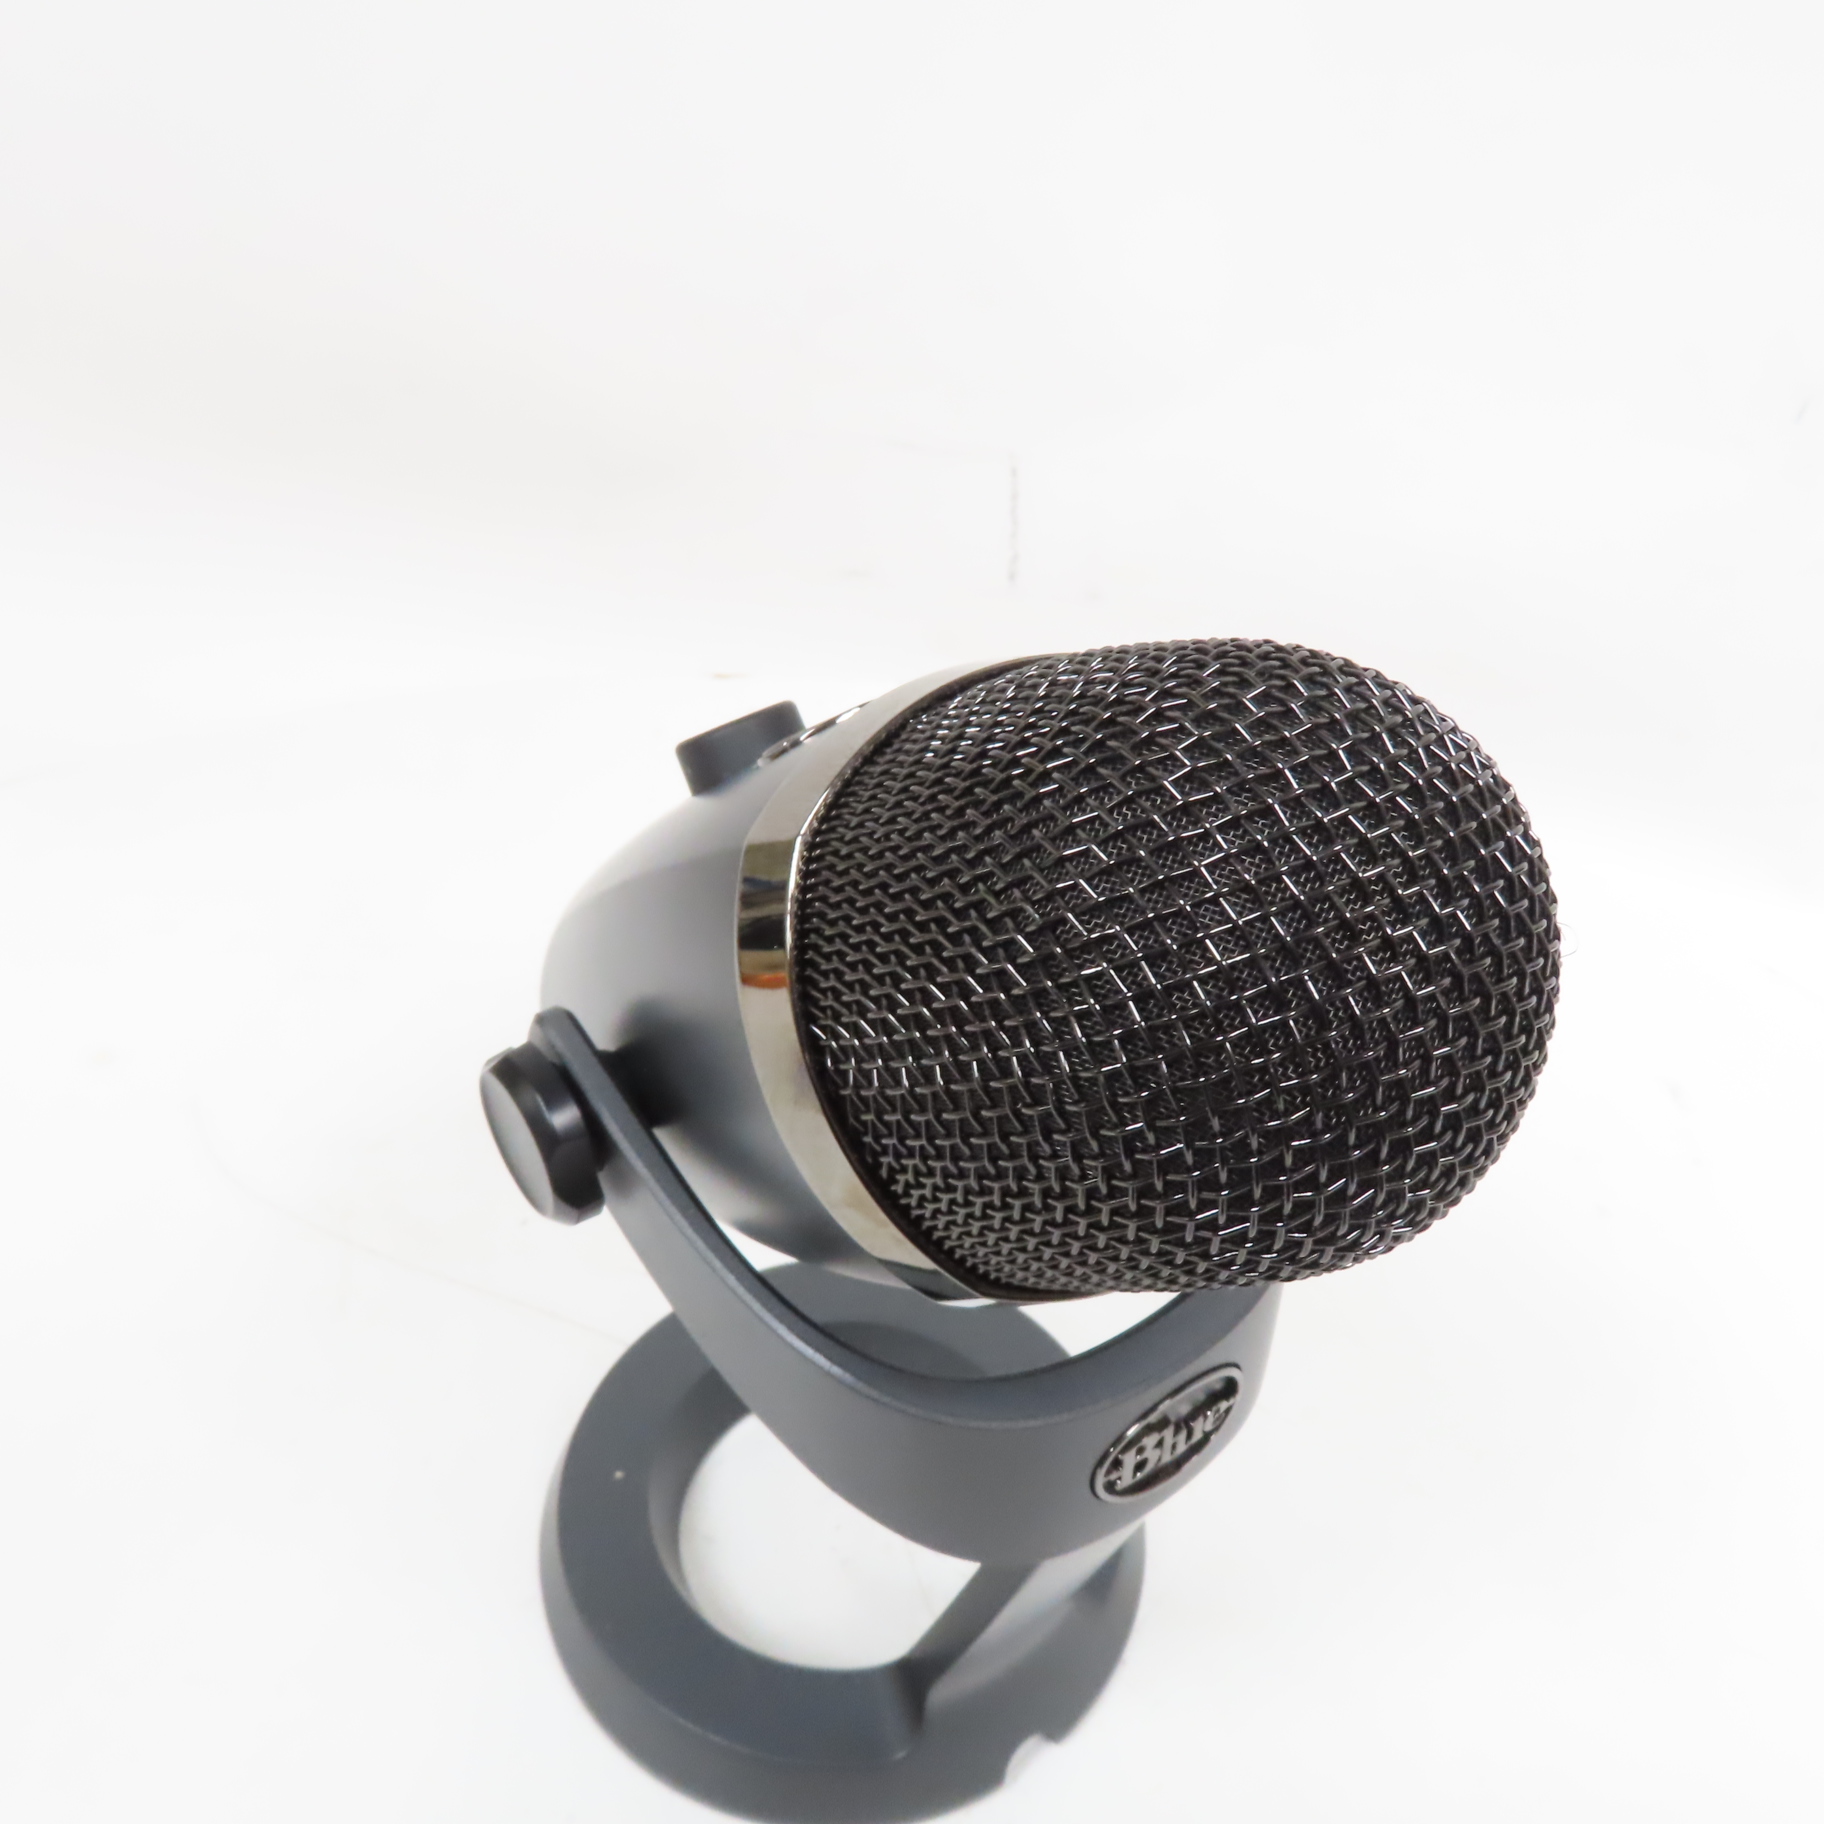 Blue Microphones Yeti Nano Multi-Pattern USB Condenser Microphone